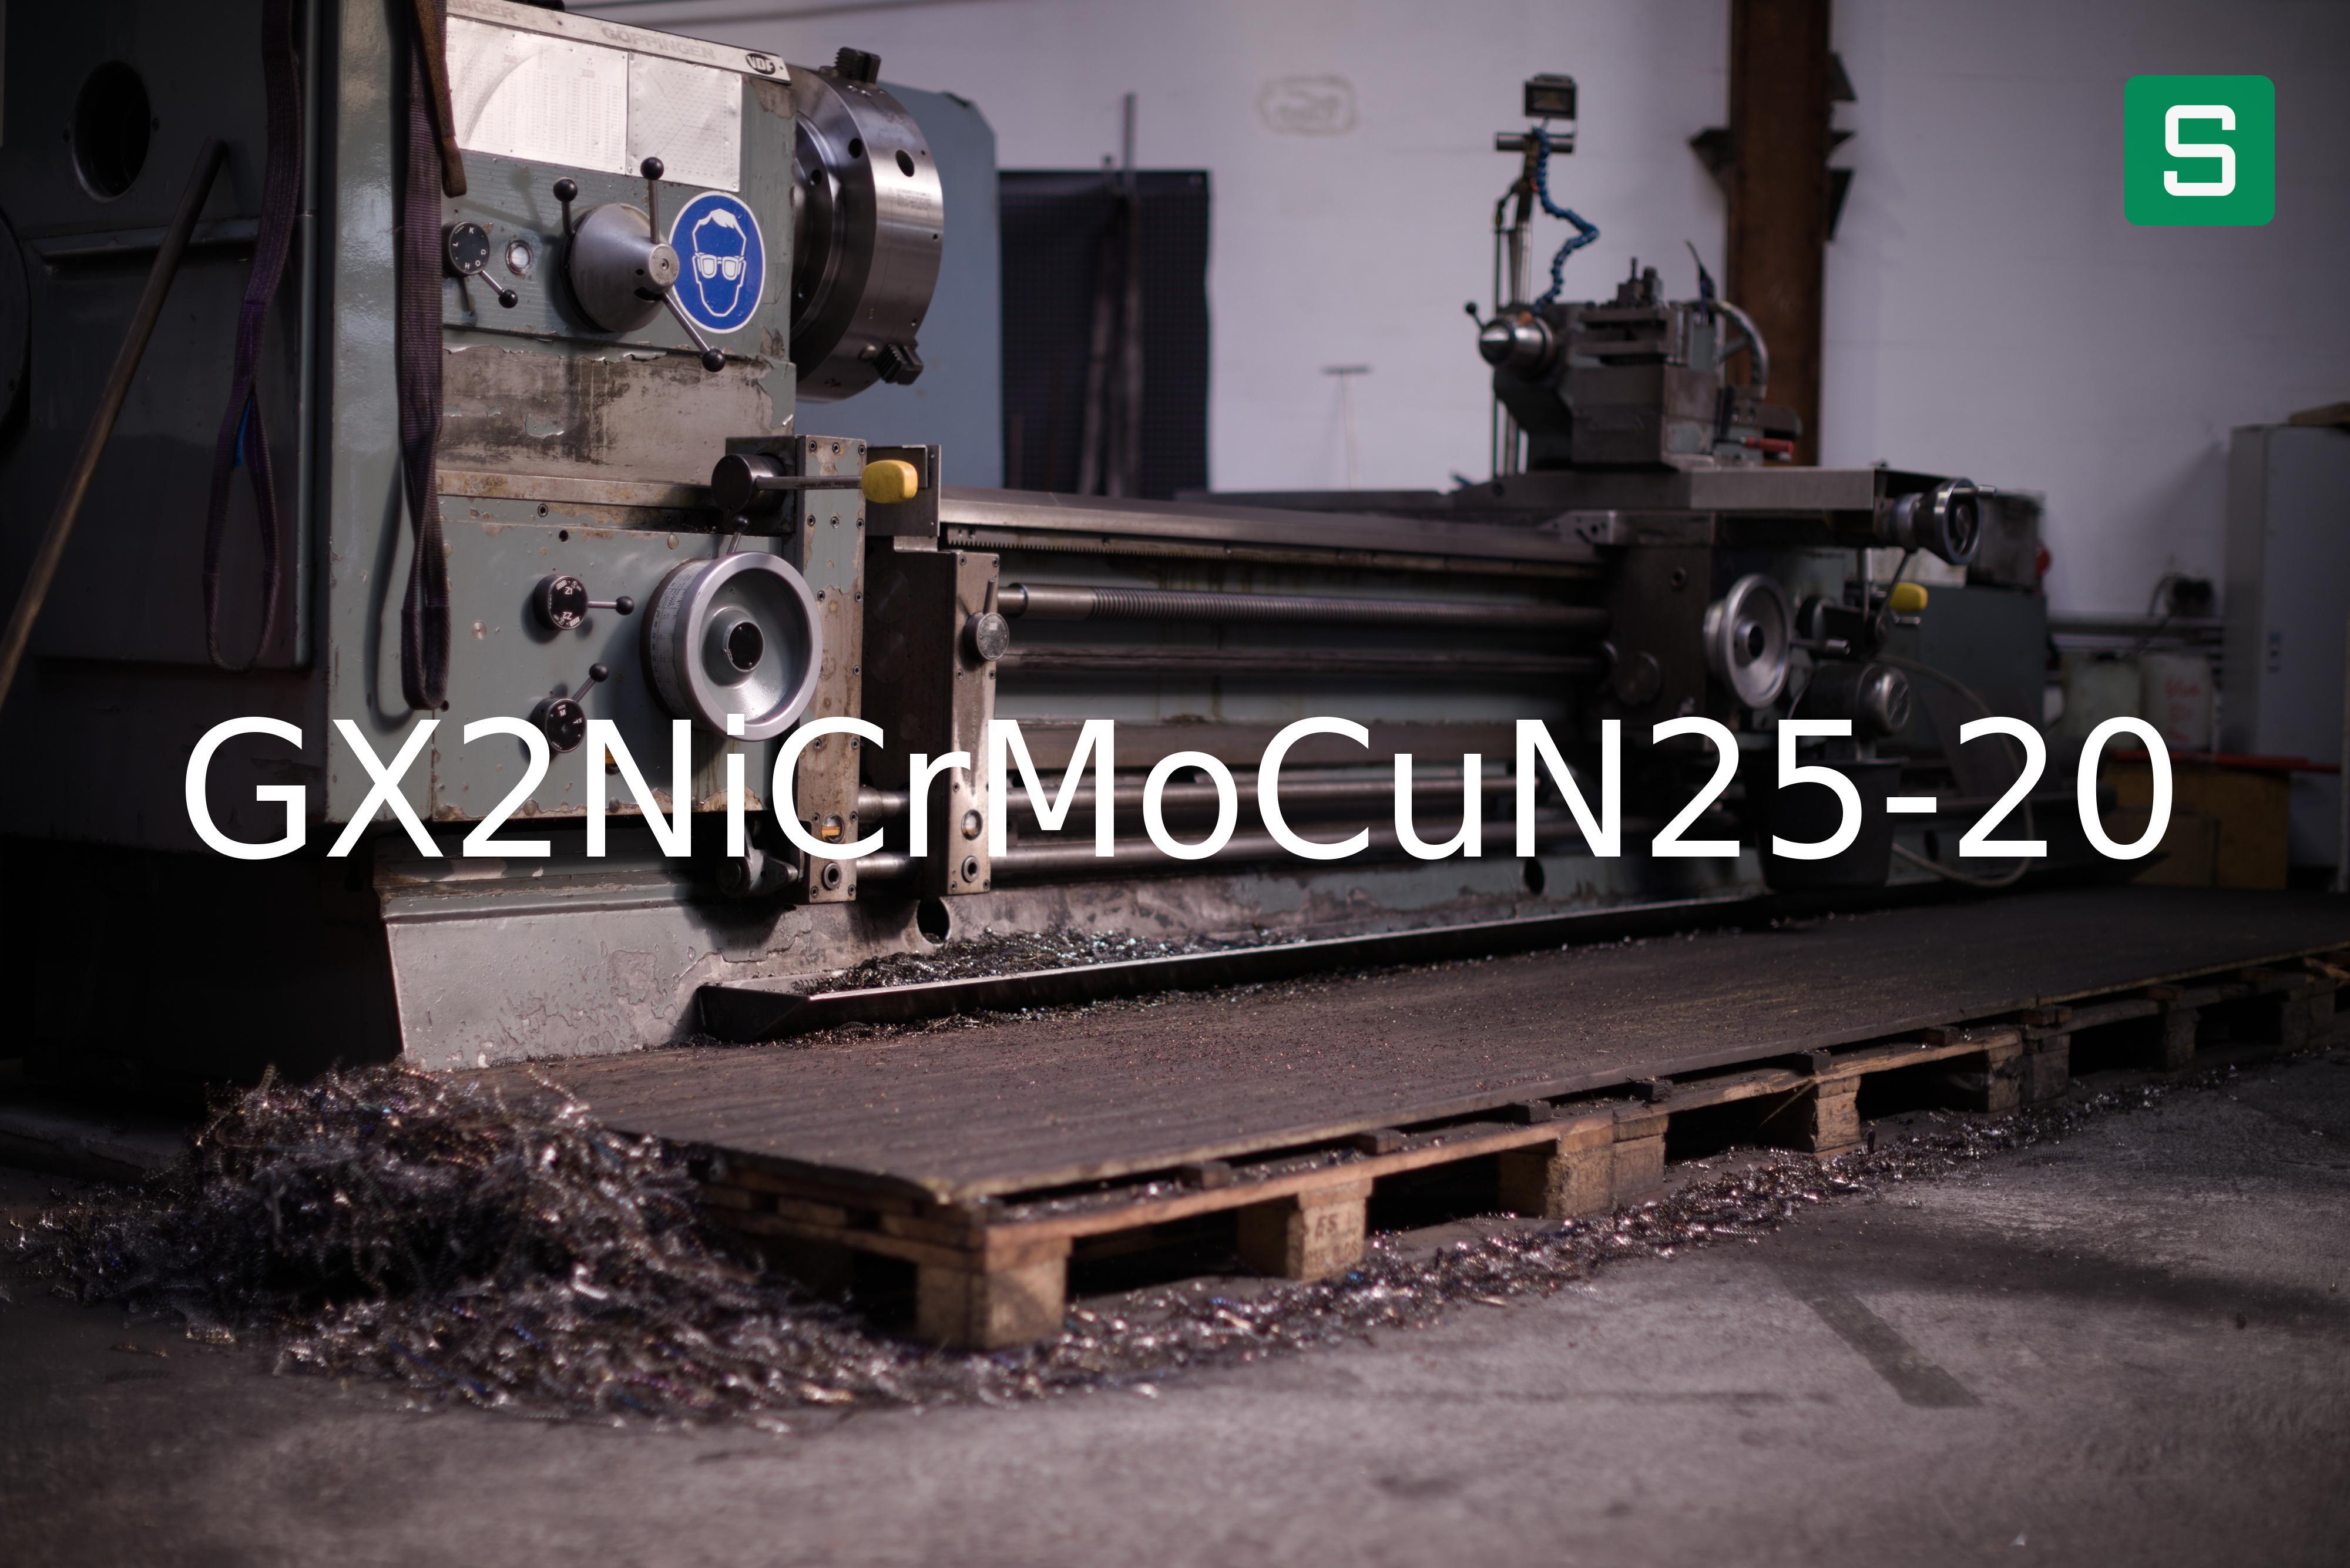 Steel Material: GX2NiCrMoCuN25-20